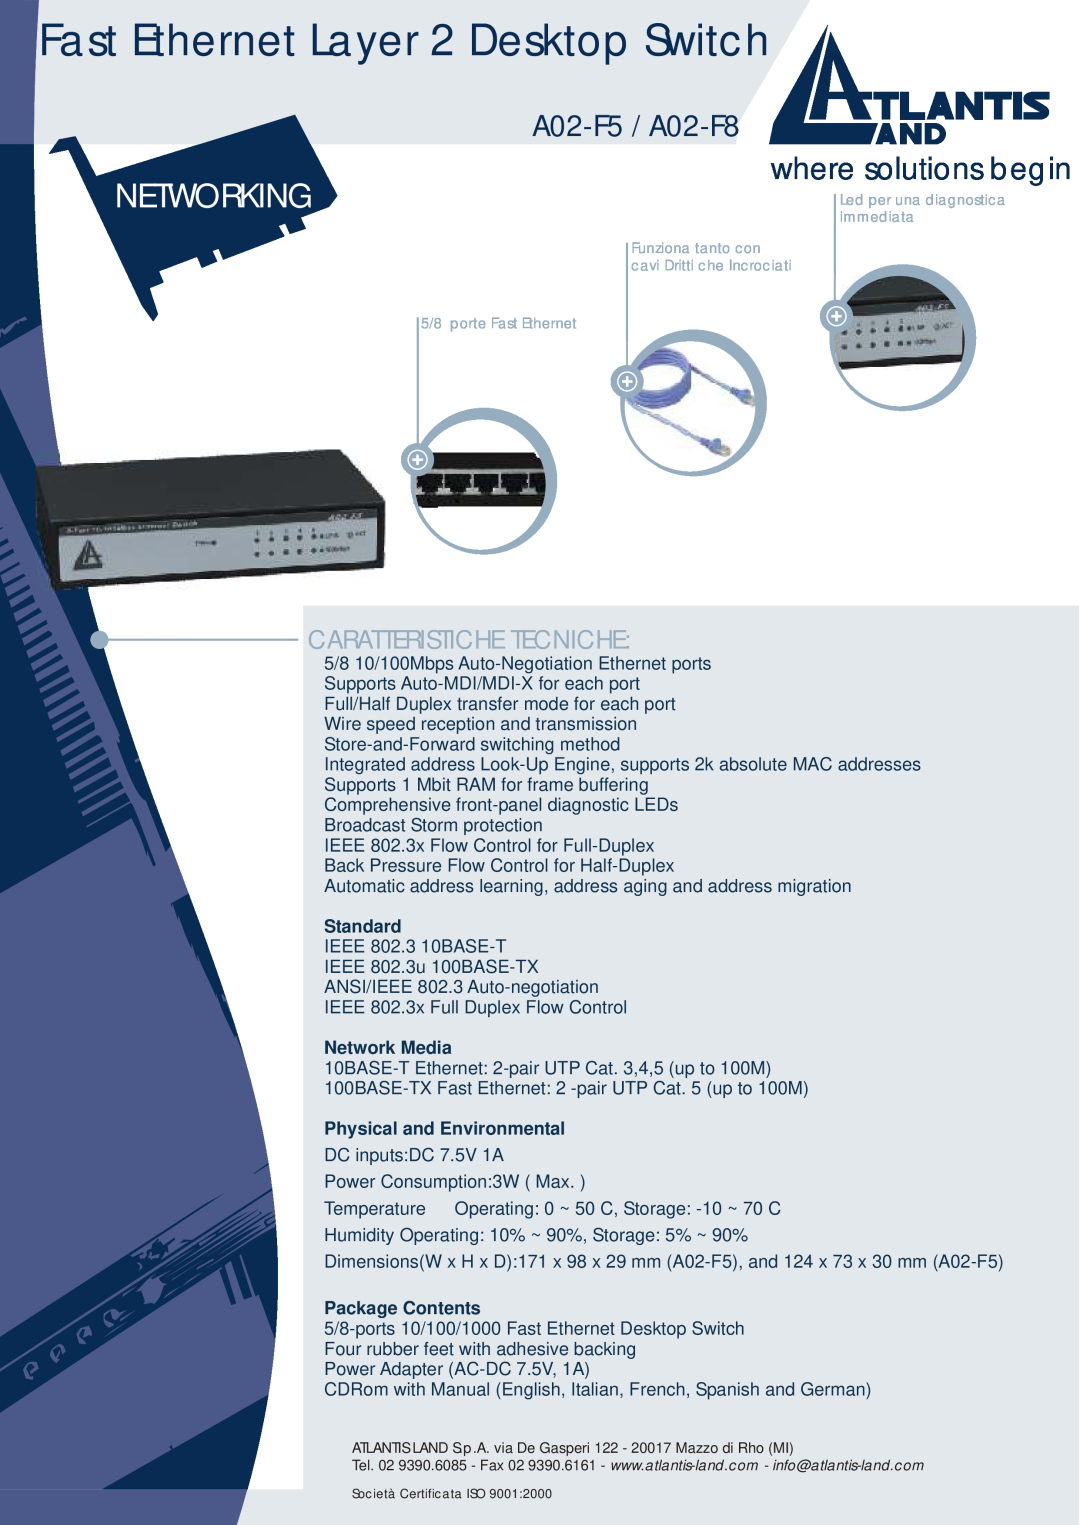 Atlantis Land A02-F8 Caratteristiche Tecniche, Fast Ethernet Layer 2 Desktop Switch, Networking, where solutions begin 